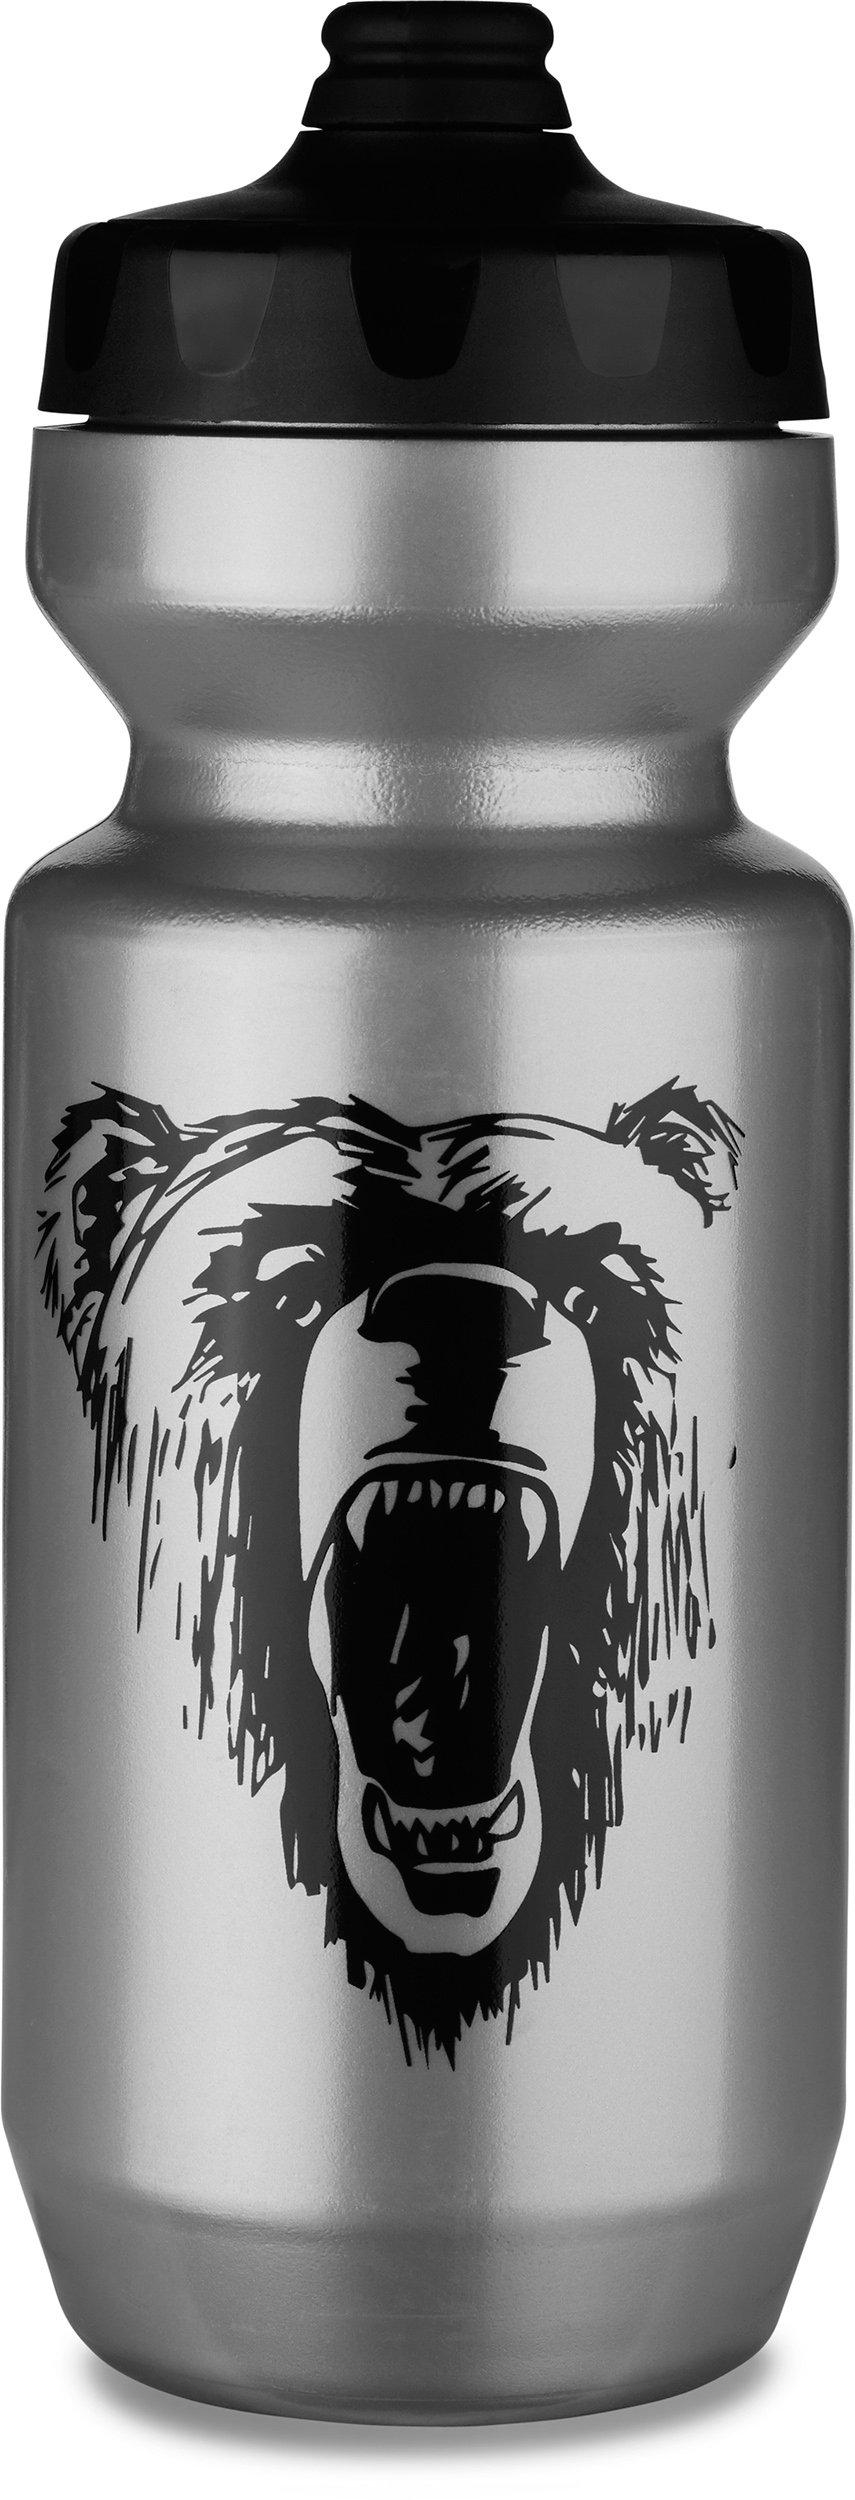 Purist Fixy Water Bottle - California Bear